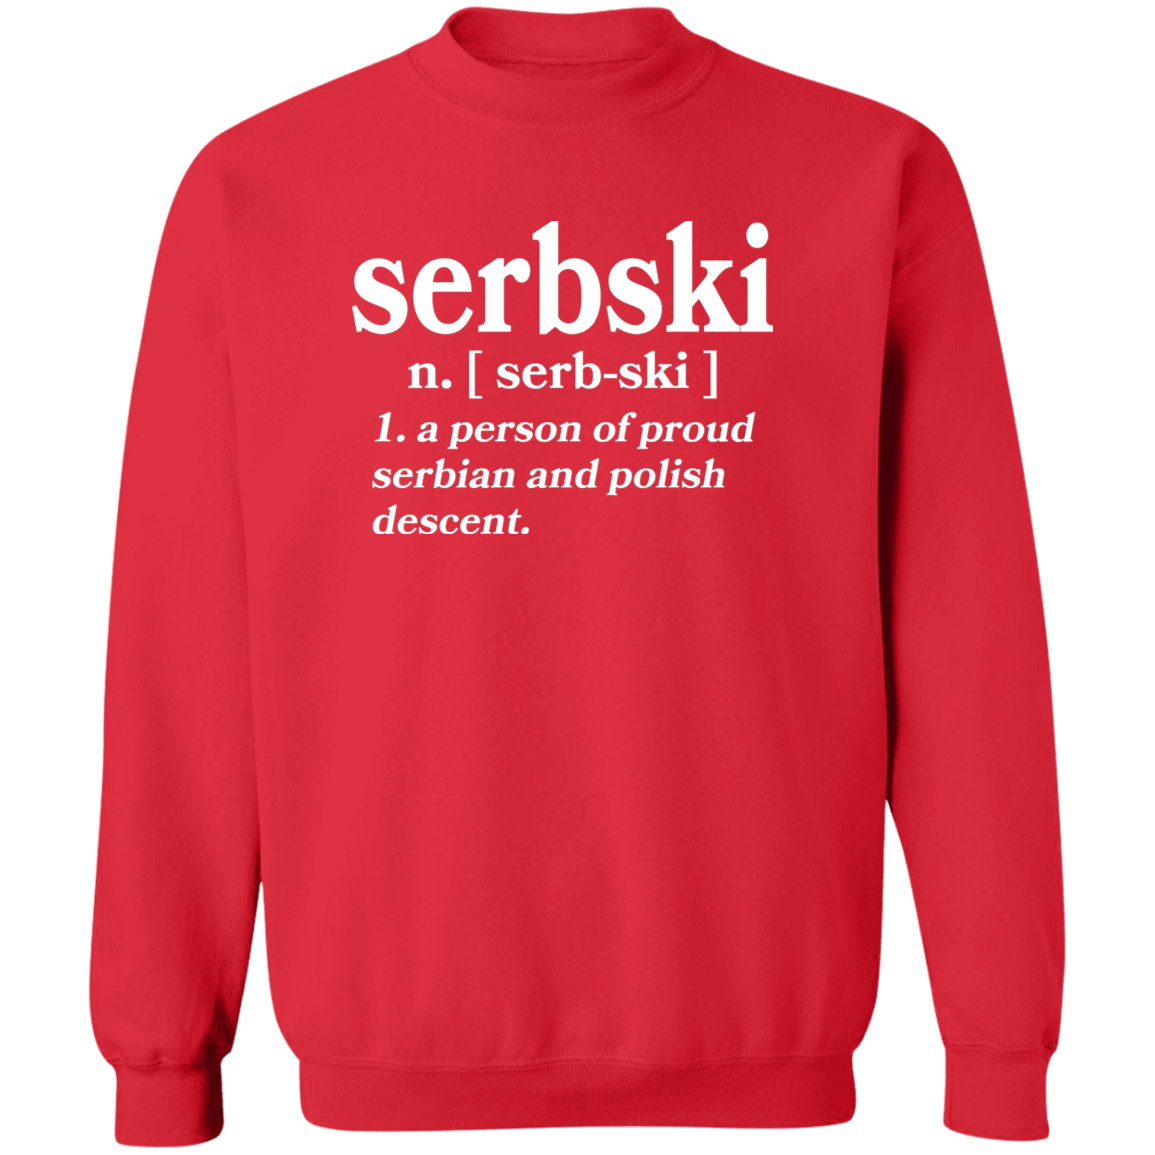 Serbski A Person Of Serbian and Polish Descent Apparel CustomCat G180 Crewneck Pullover Sweatshirt Red S